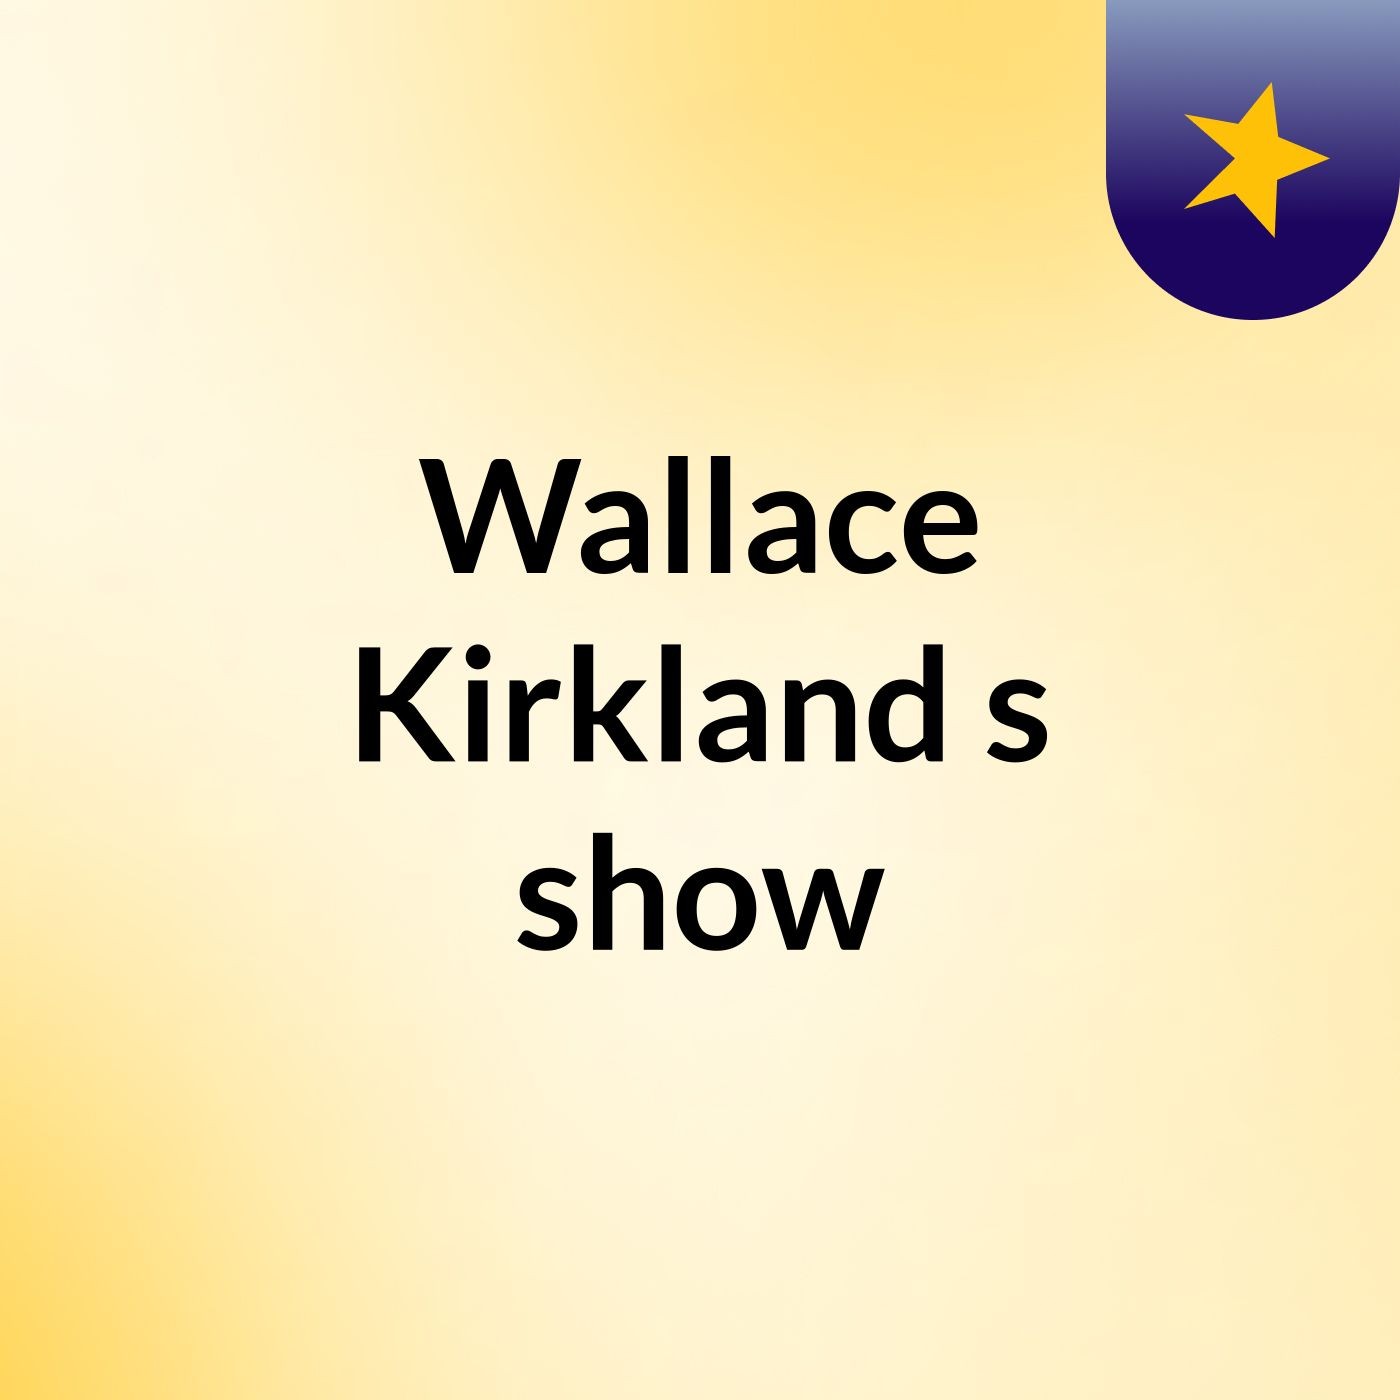 Wallace Kirkland's show